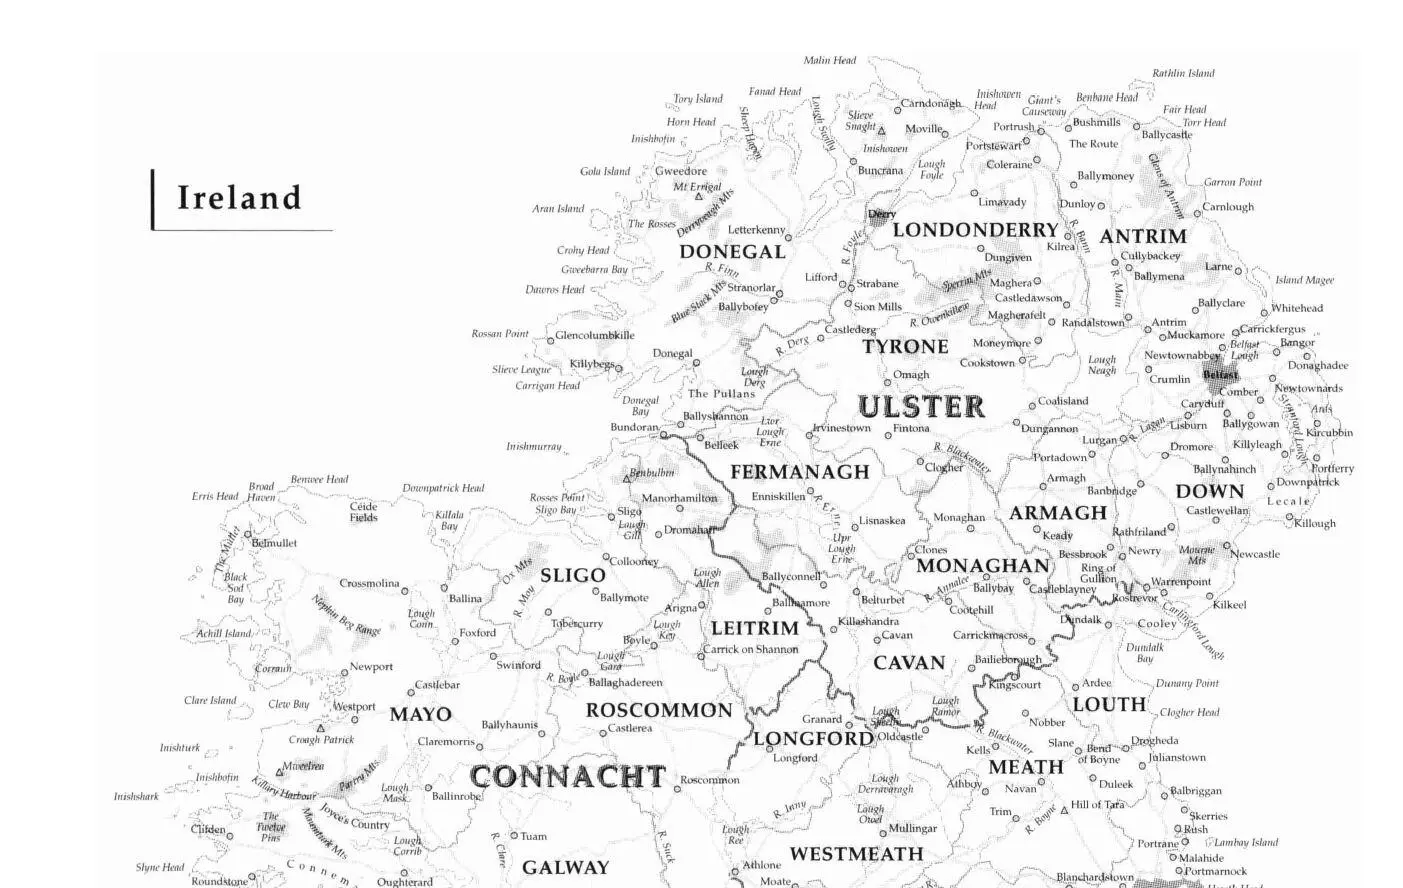 From FHA Aalen K Whelan M Stout eds 1997 Atlas of the Irish Rural - фото 2